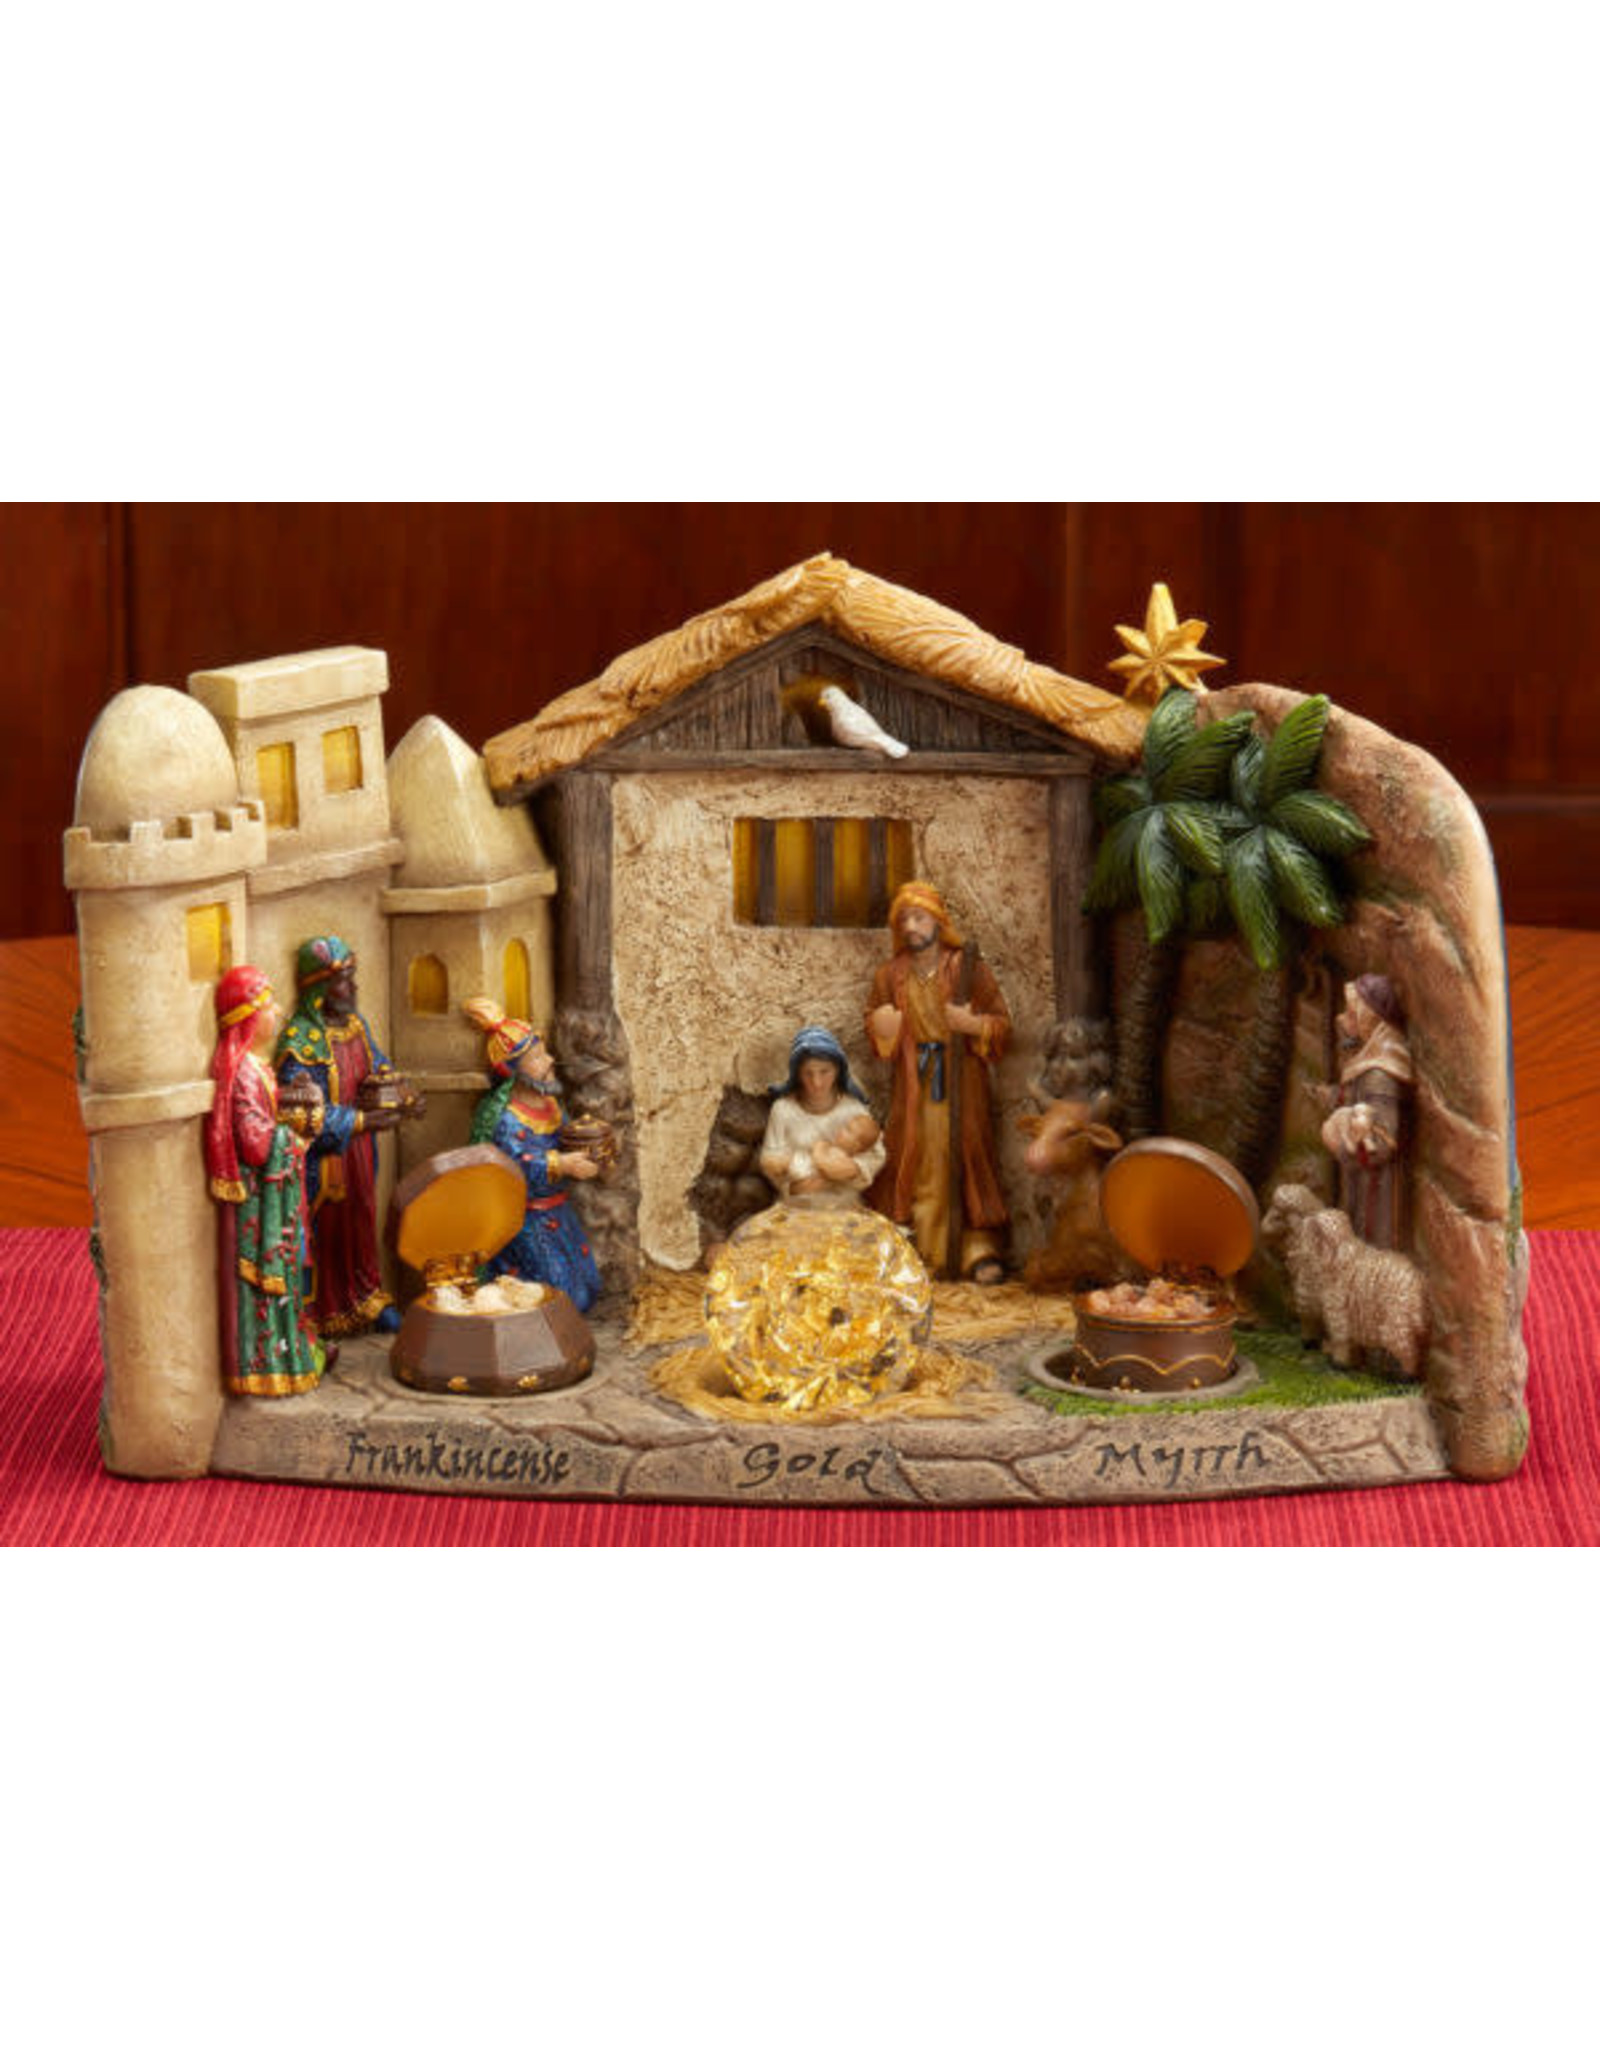 Three Kings Panorama Nativity with Gold, Frankincense & Myrrh